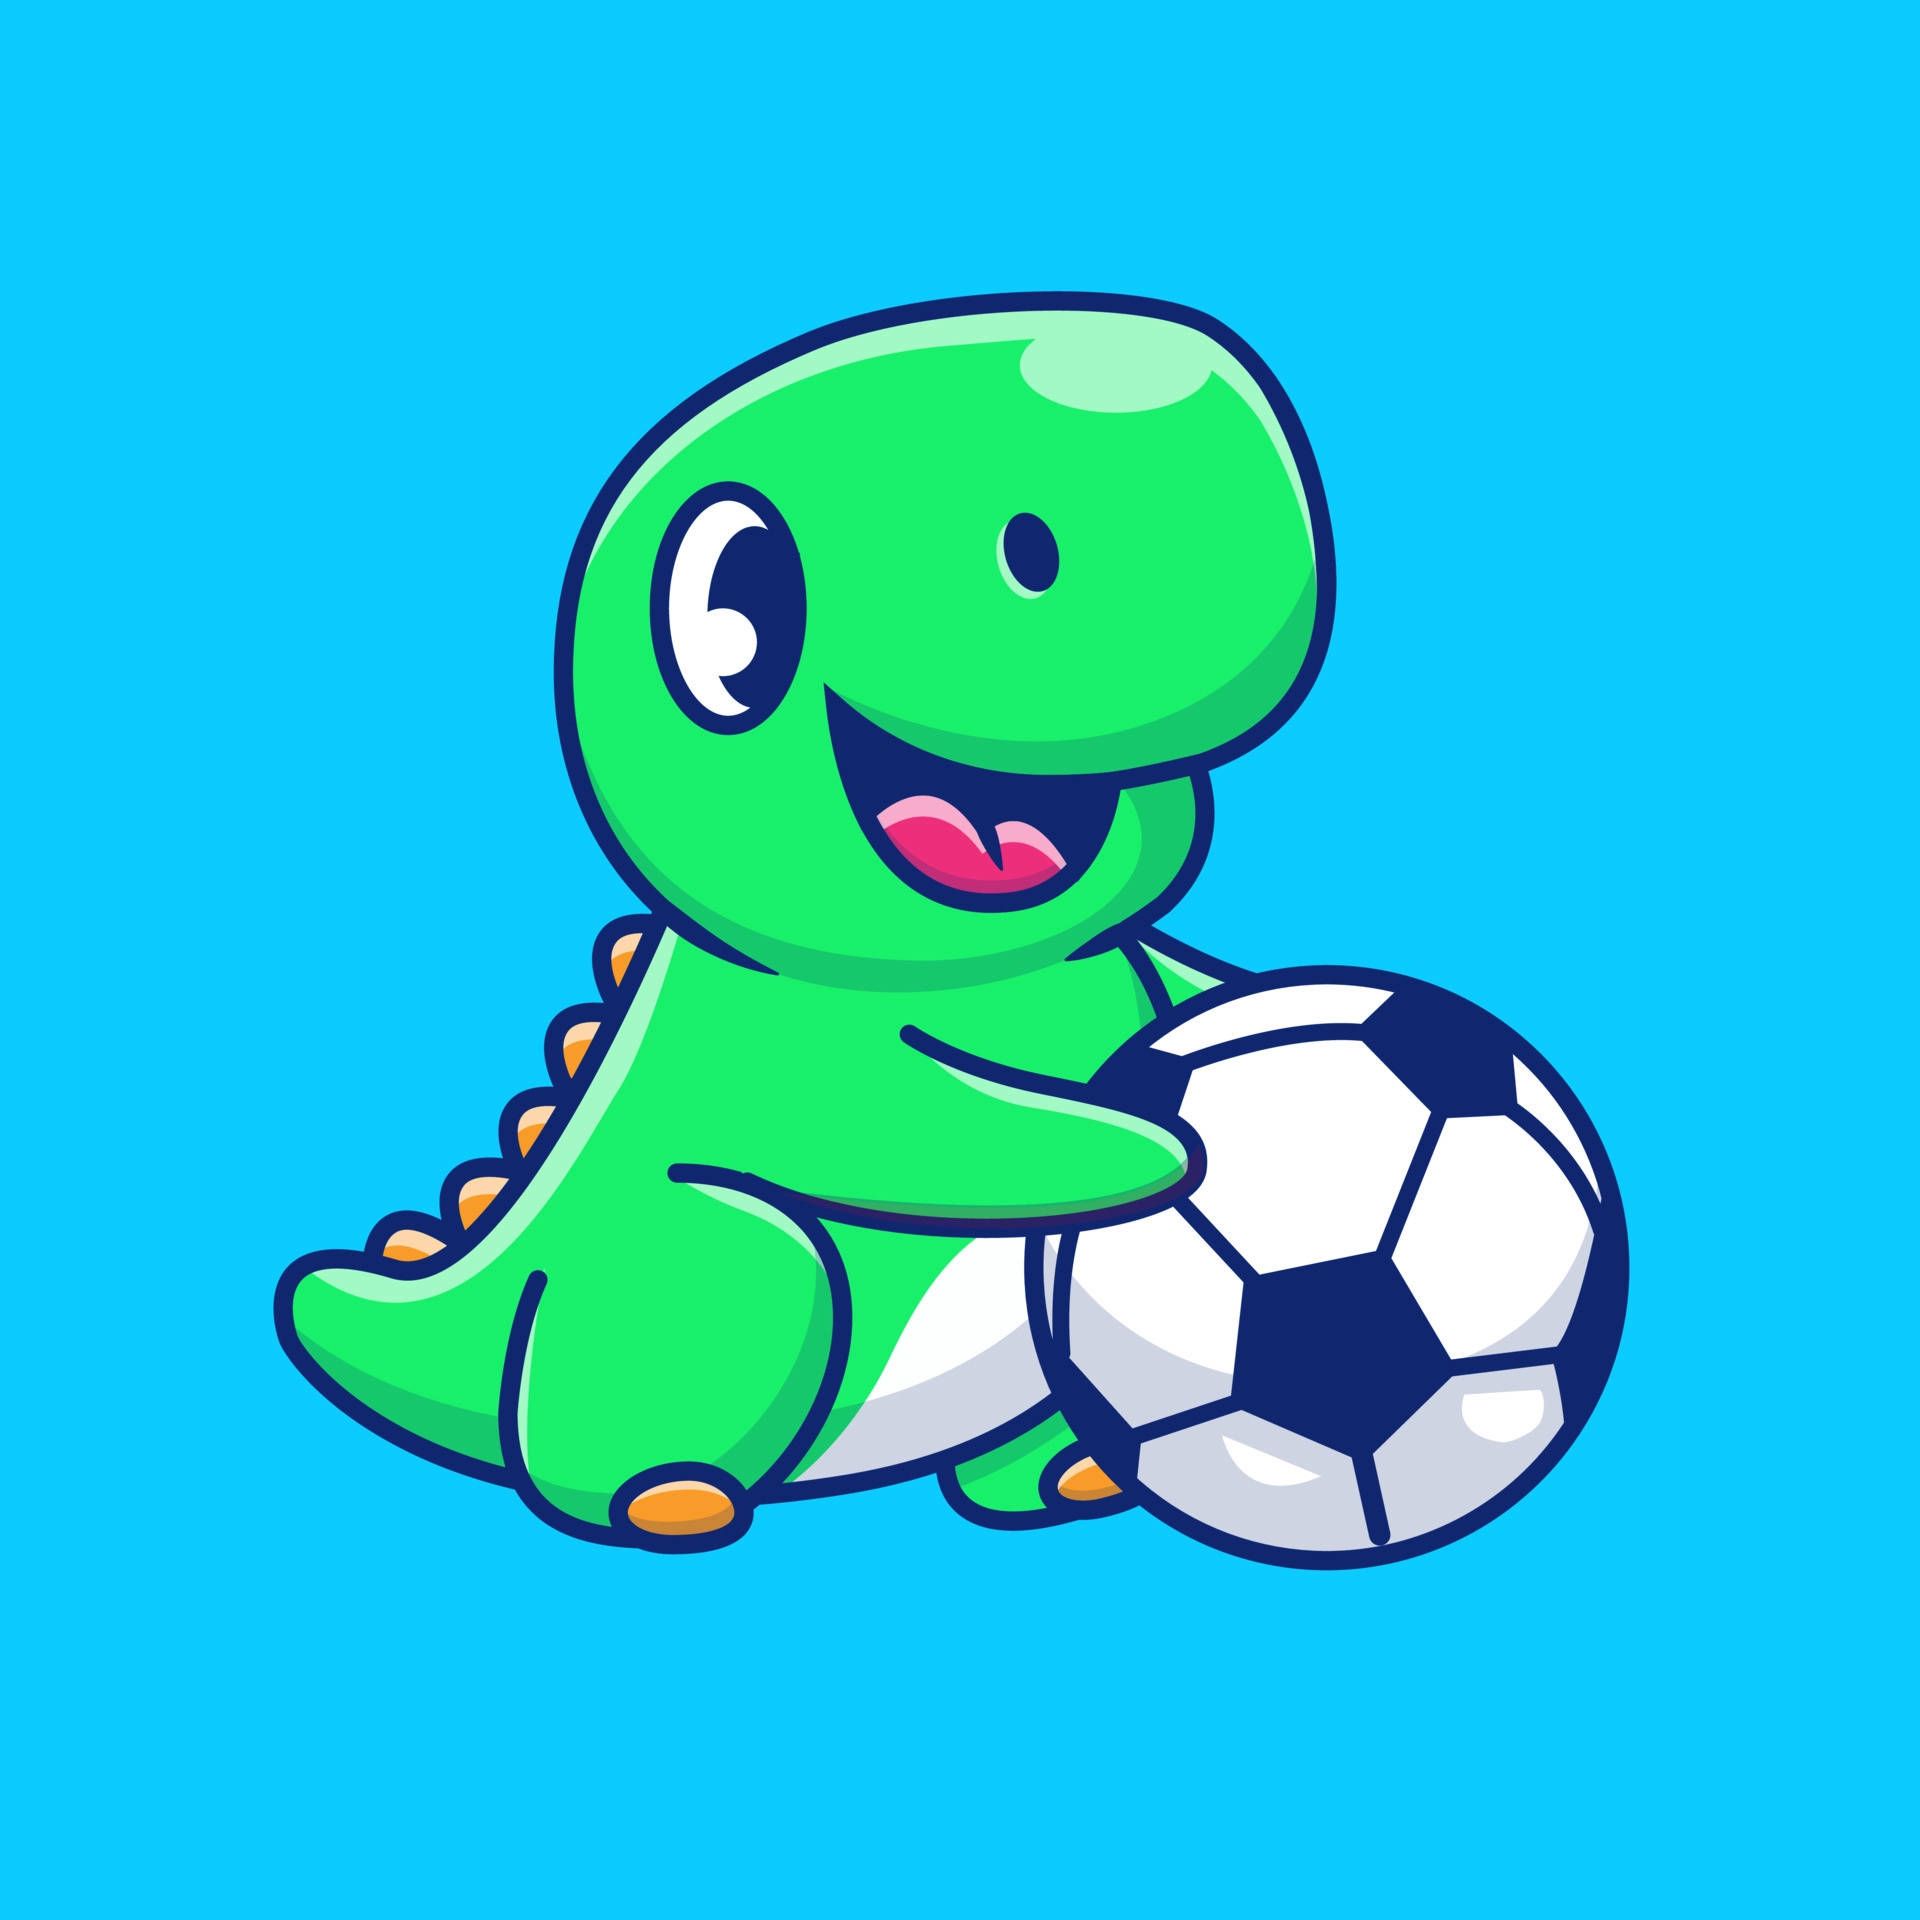 A cute little dinosaur holding up soccer ball - Soccer